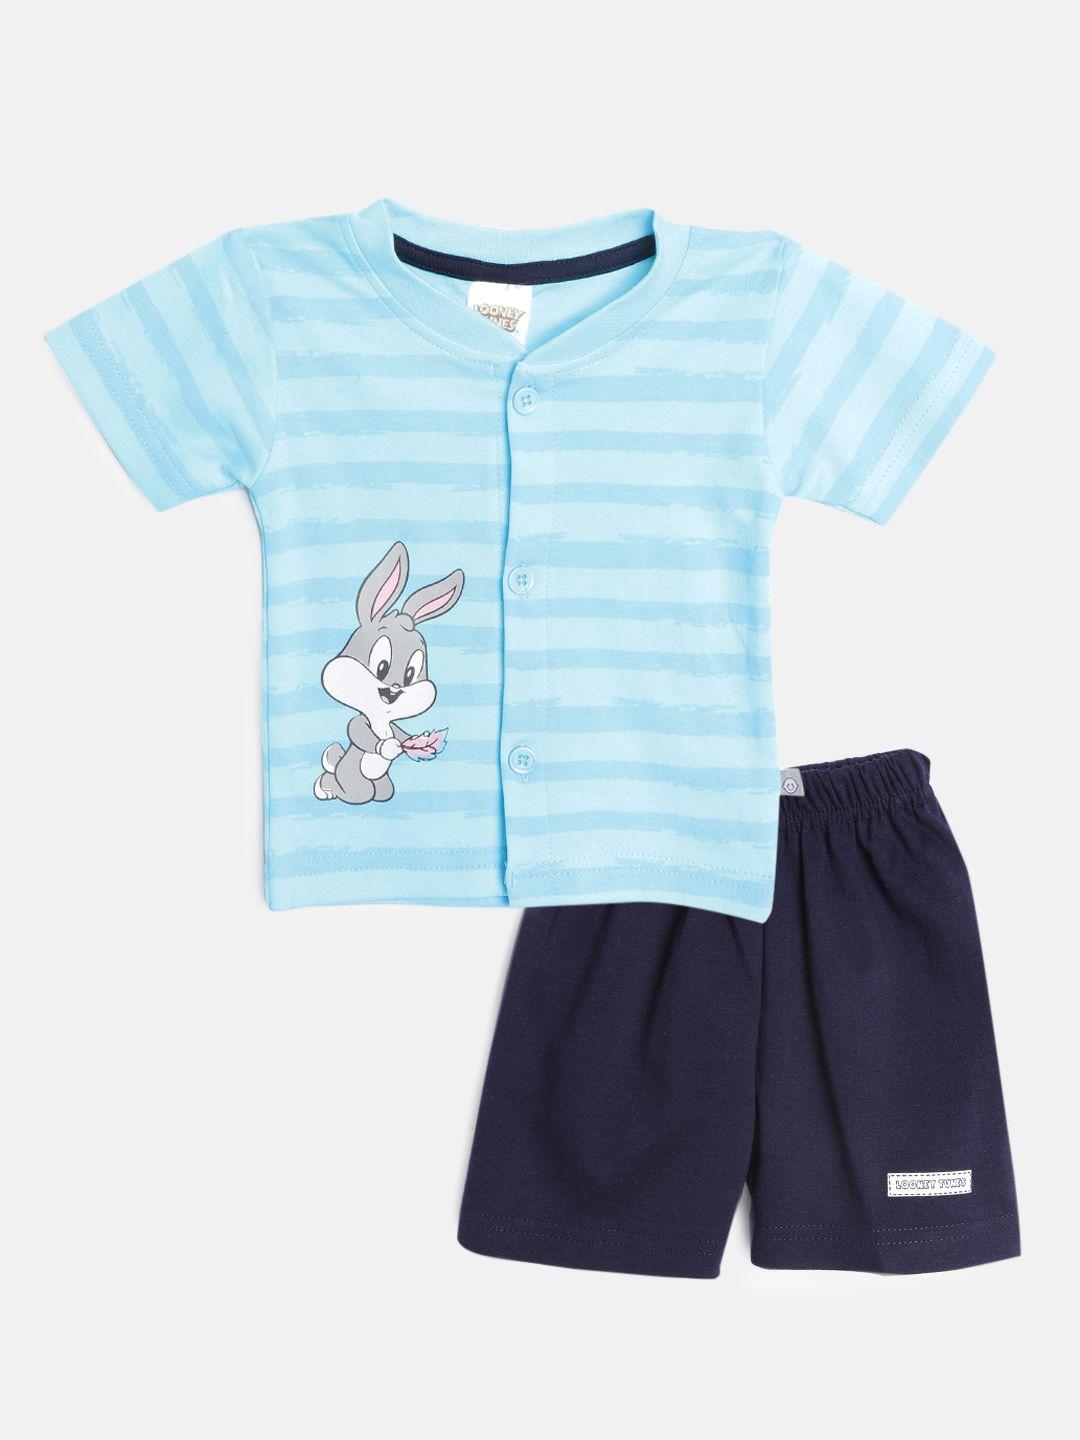 tinyo infant blue & grey striped & bugs bunny print cotton clothing set